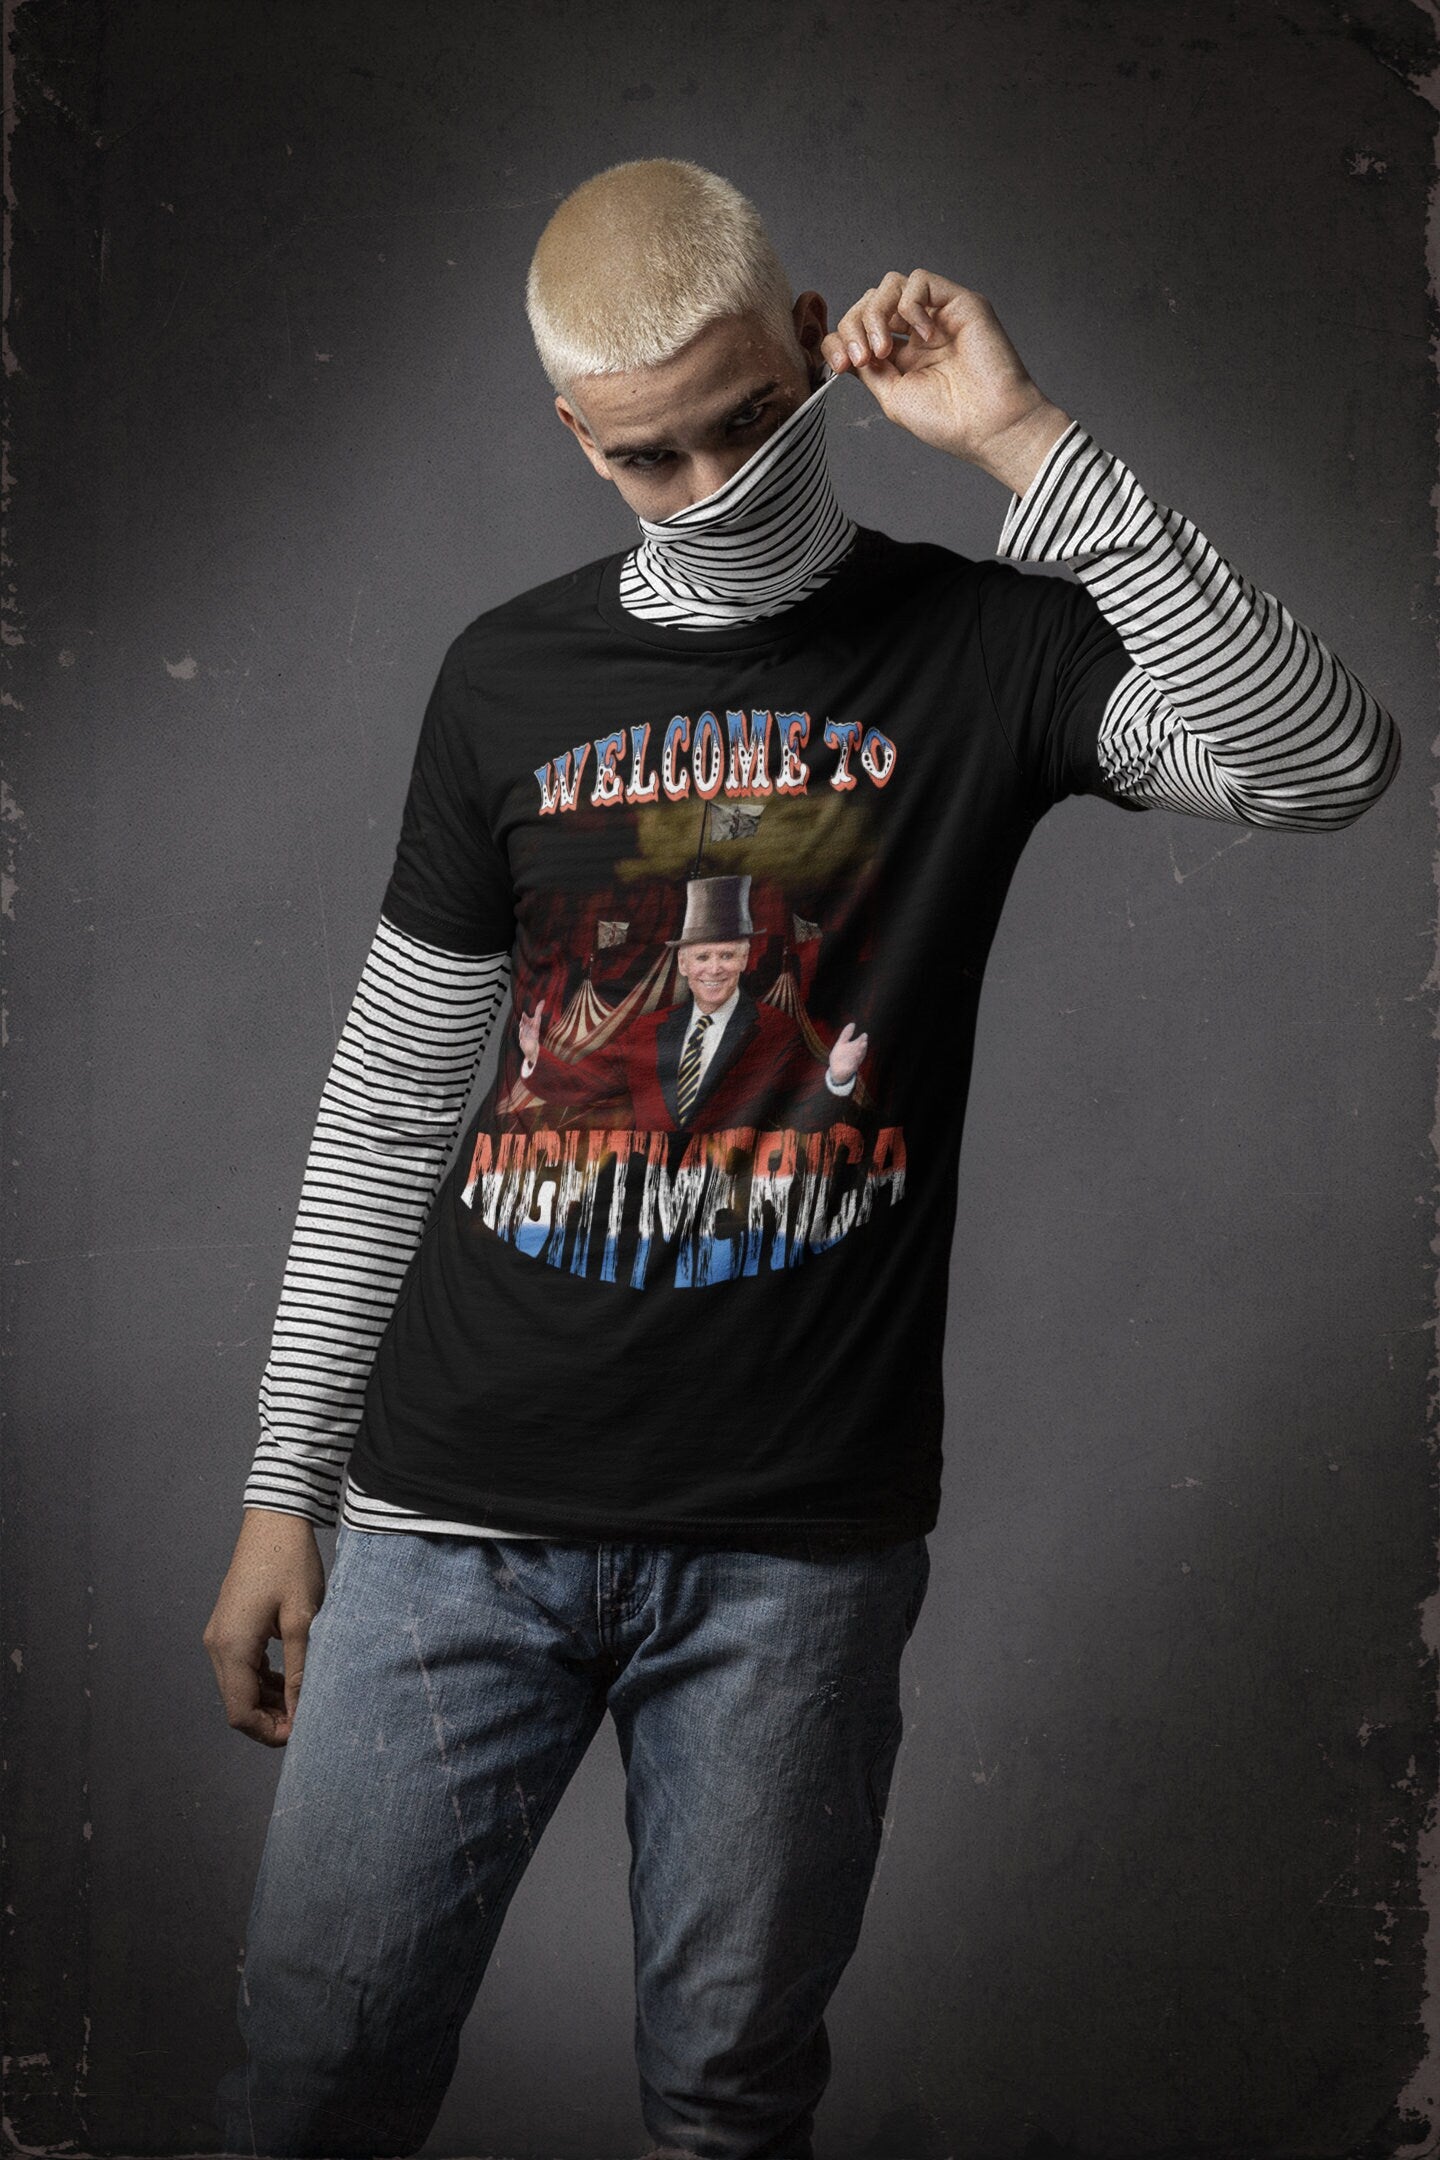 Welcome to Nightmerica - JOE BIDEN Circus - Custom Graphic DTG Printed Cotton T Shirt